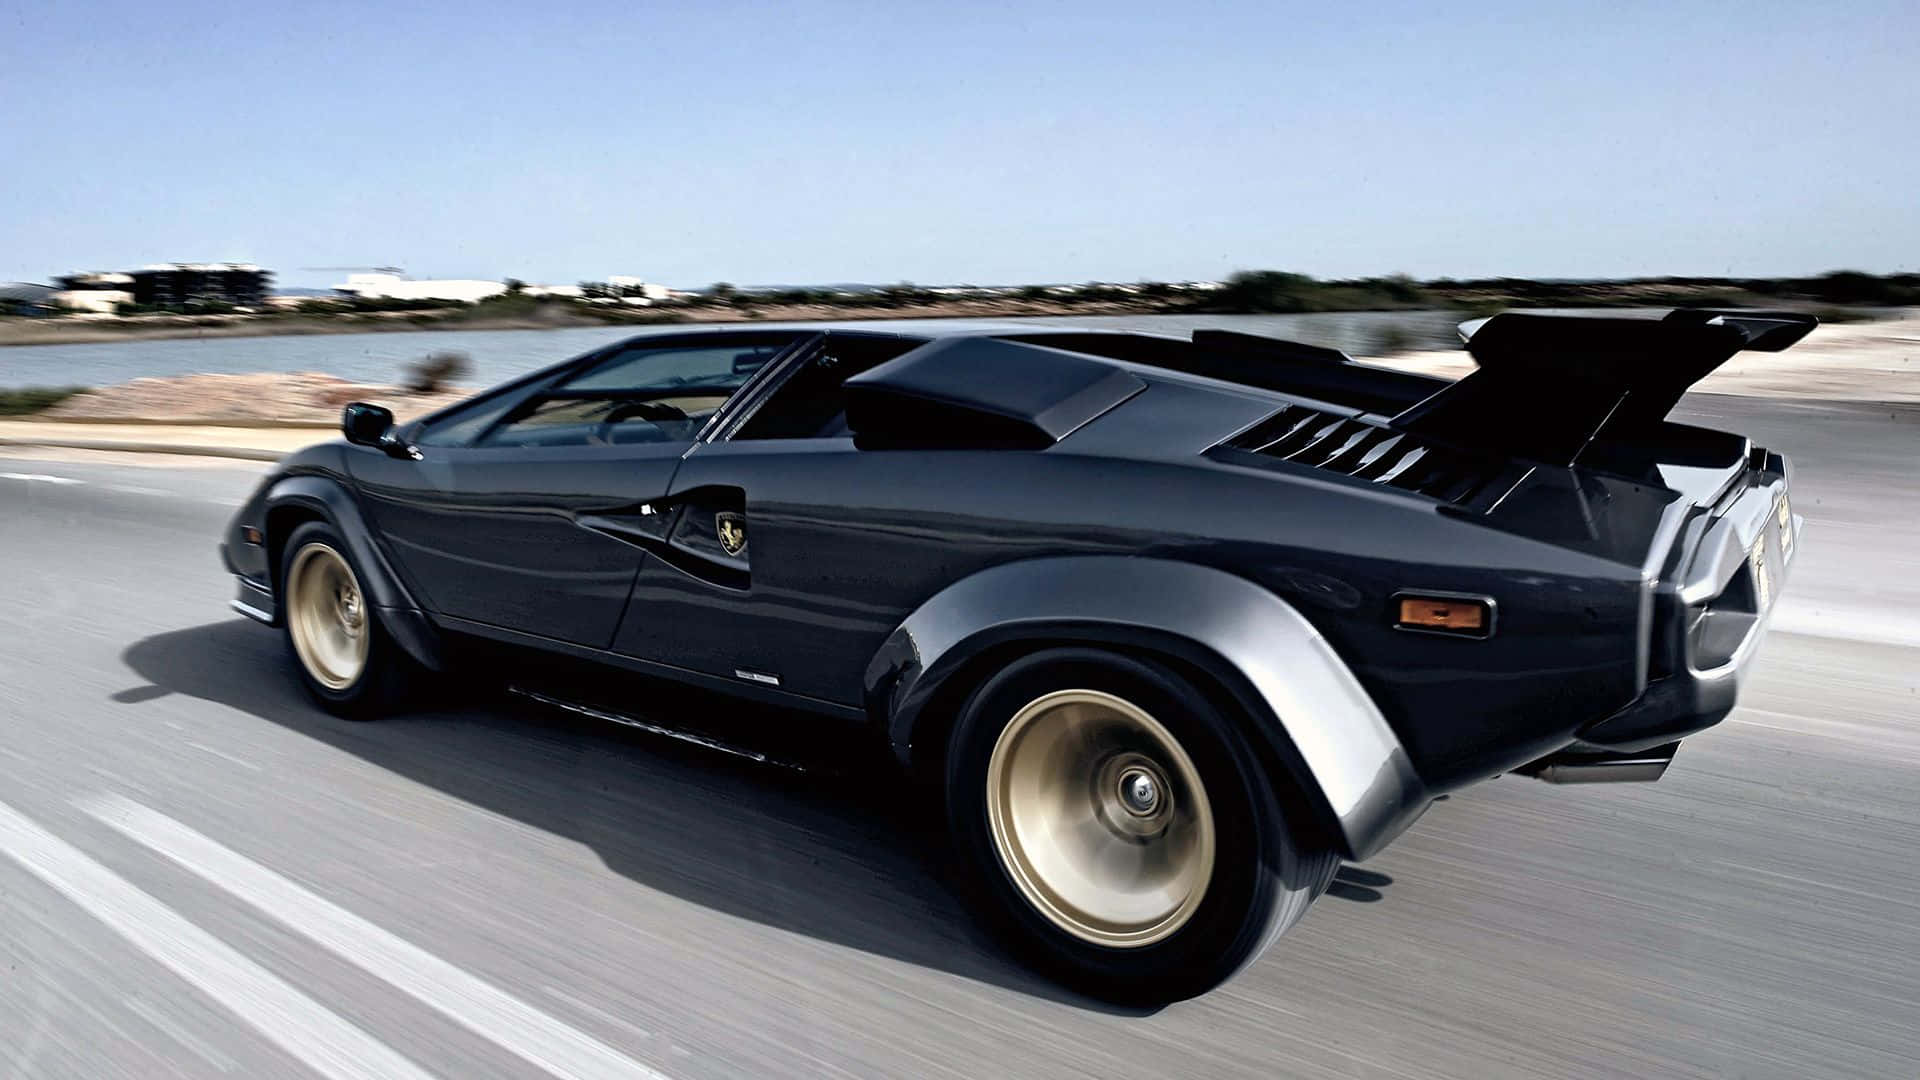 Stunning Lamborghini Countach in action Wallpaper